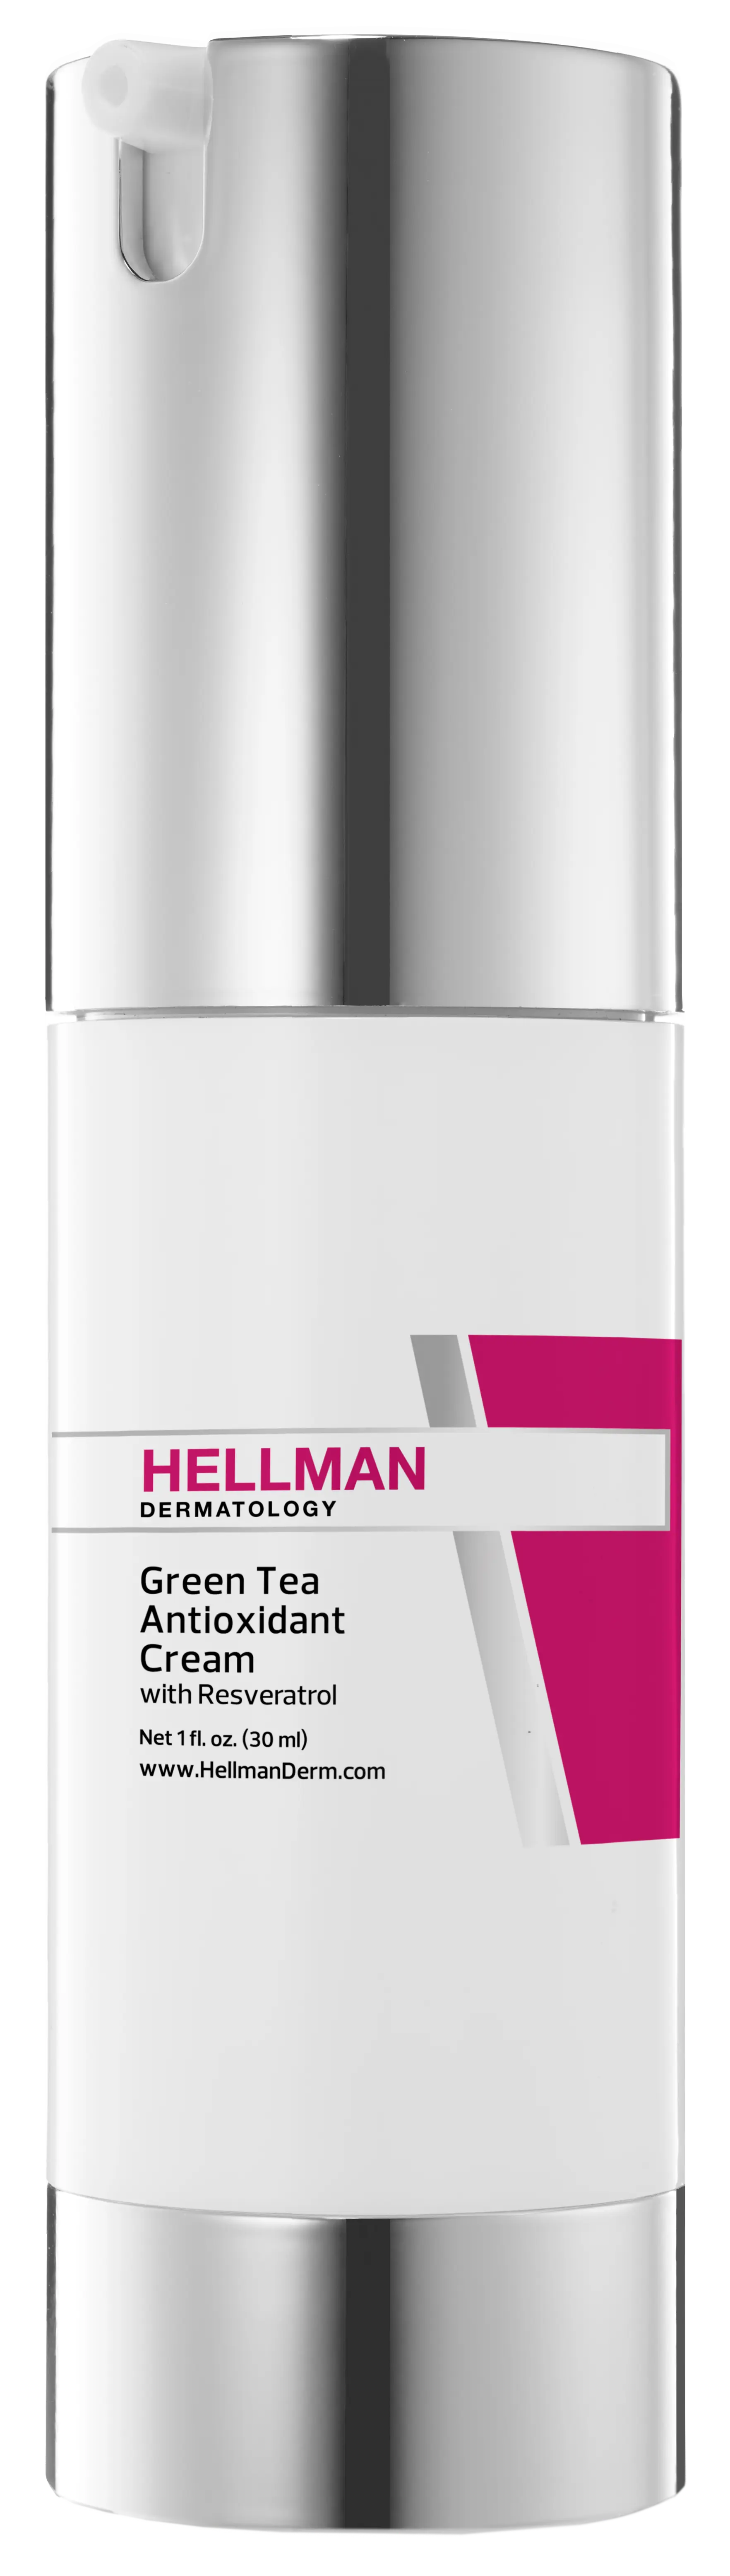 Green Tea Antioxidant Cream. Price: $70